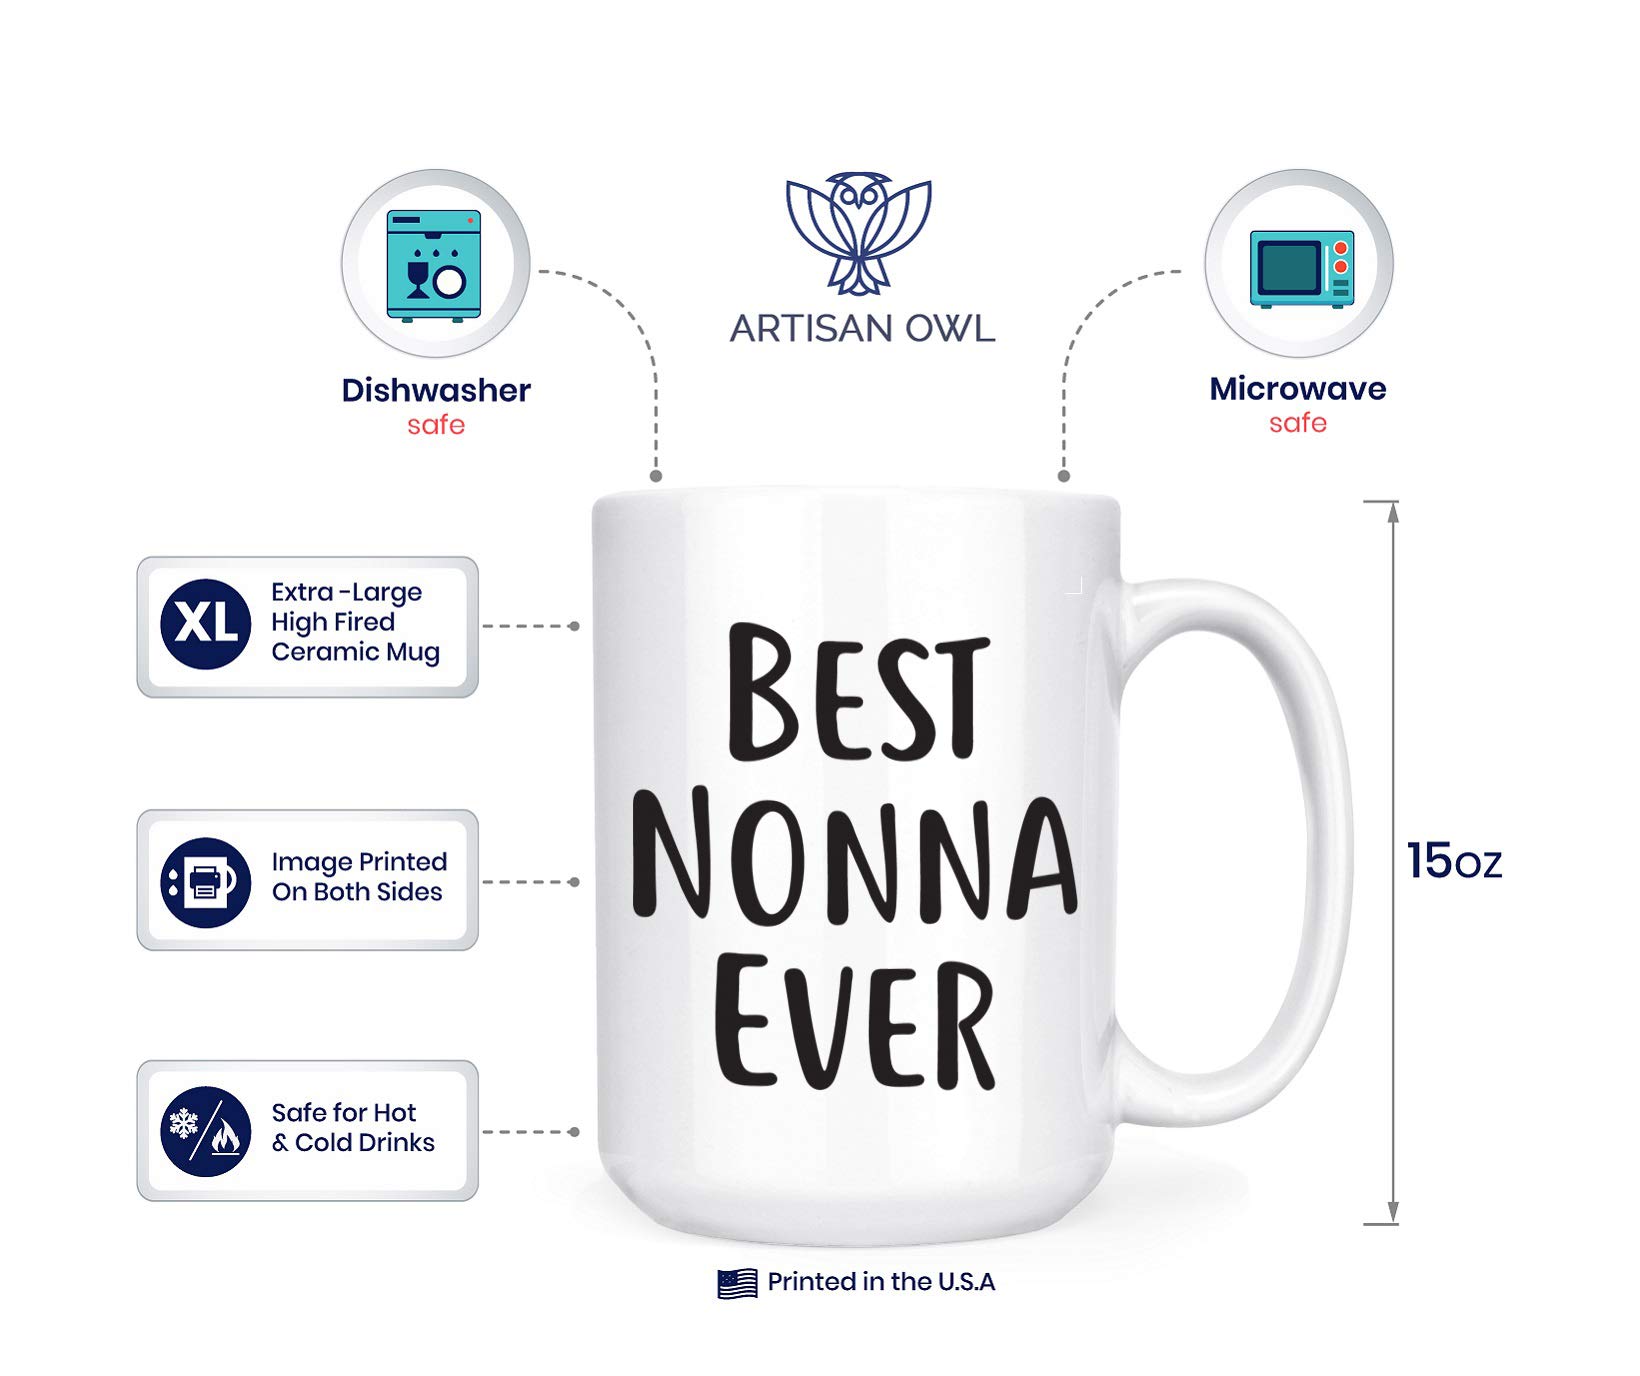 Artisan Owl Best Nonna Ever - 15 oz Double-Sided Coffee Tea Mug (Best Nonna Ever)